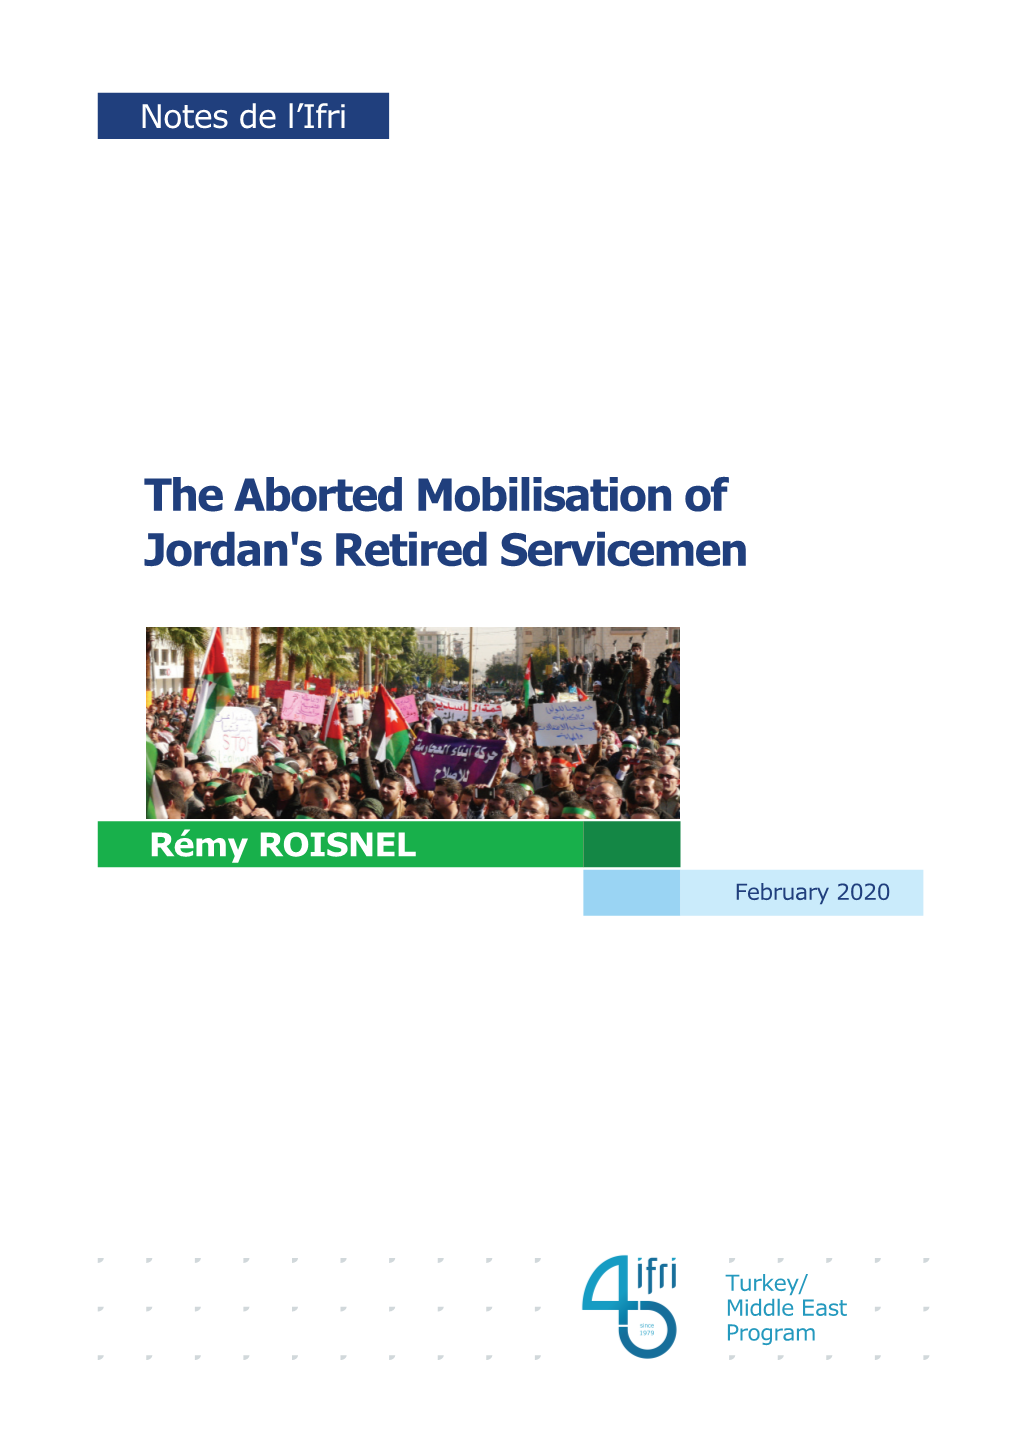 The Aborted Mobilisation of Jordan's Retired Servicemen